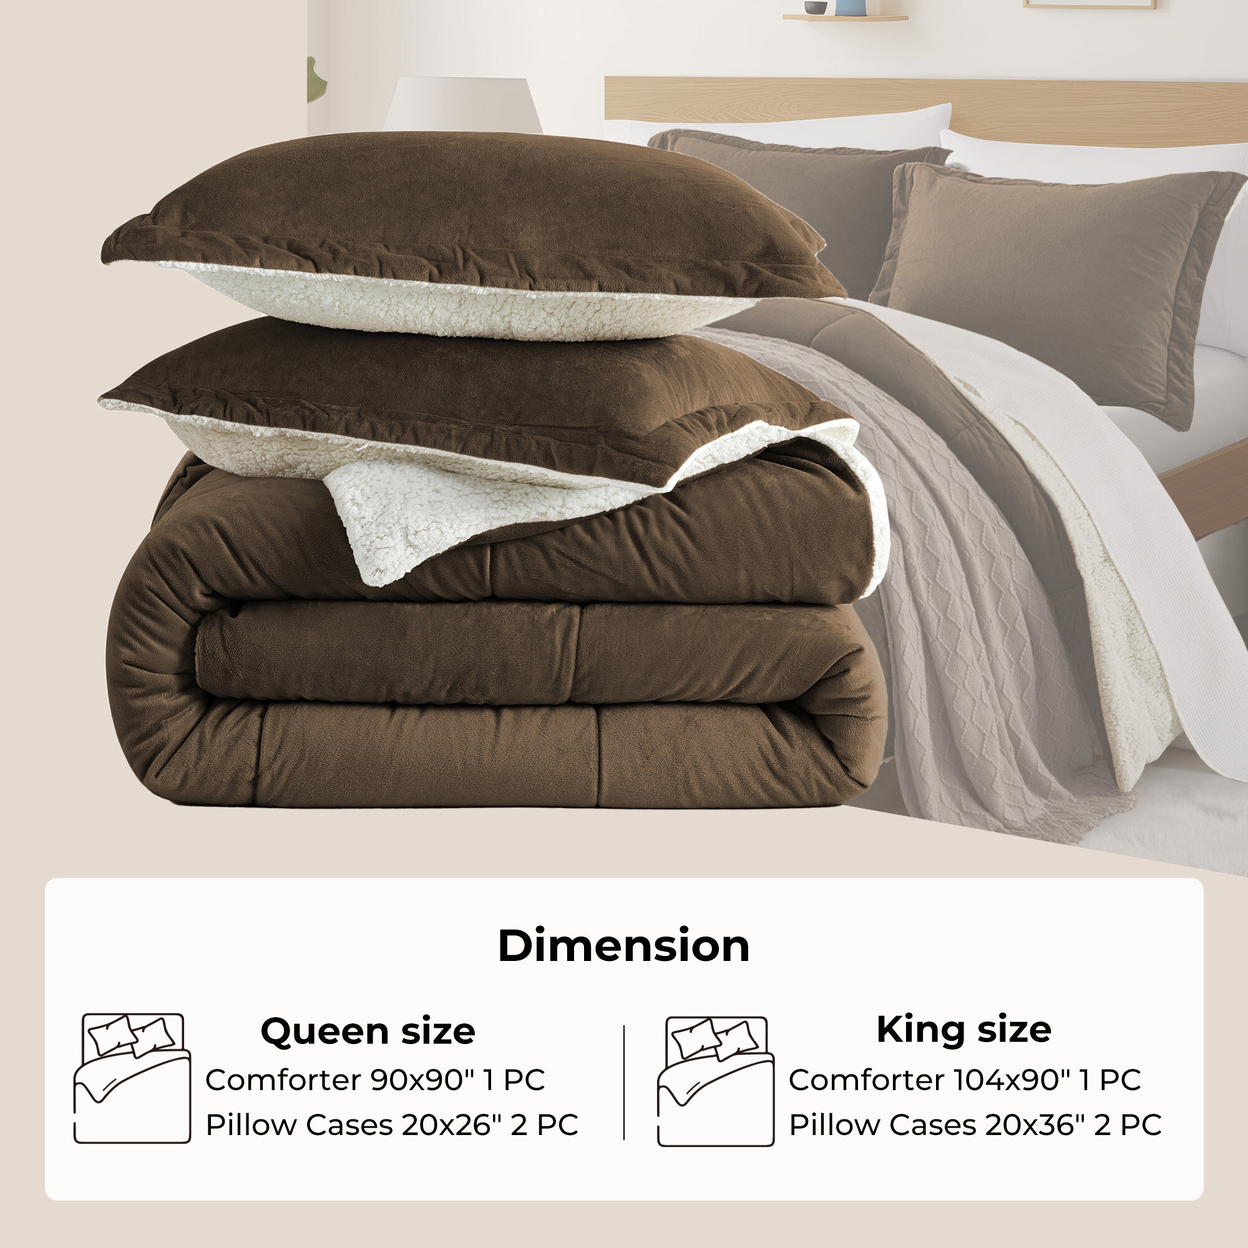 3 Piece All Season Comforter Set With Shams Reversible Faux Shearling-Down Alternative Comforter Set - Dark Brown, Queen Size-9090